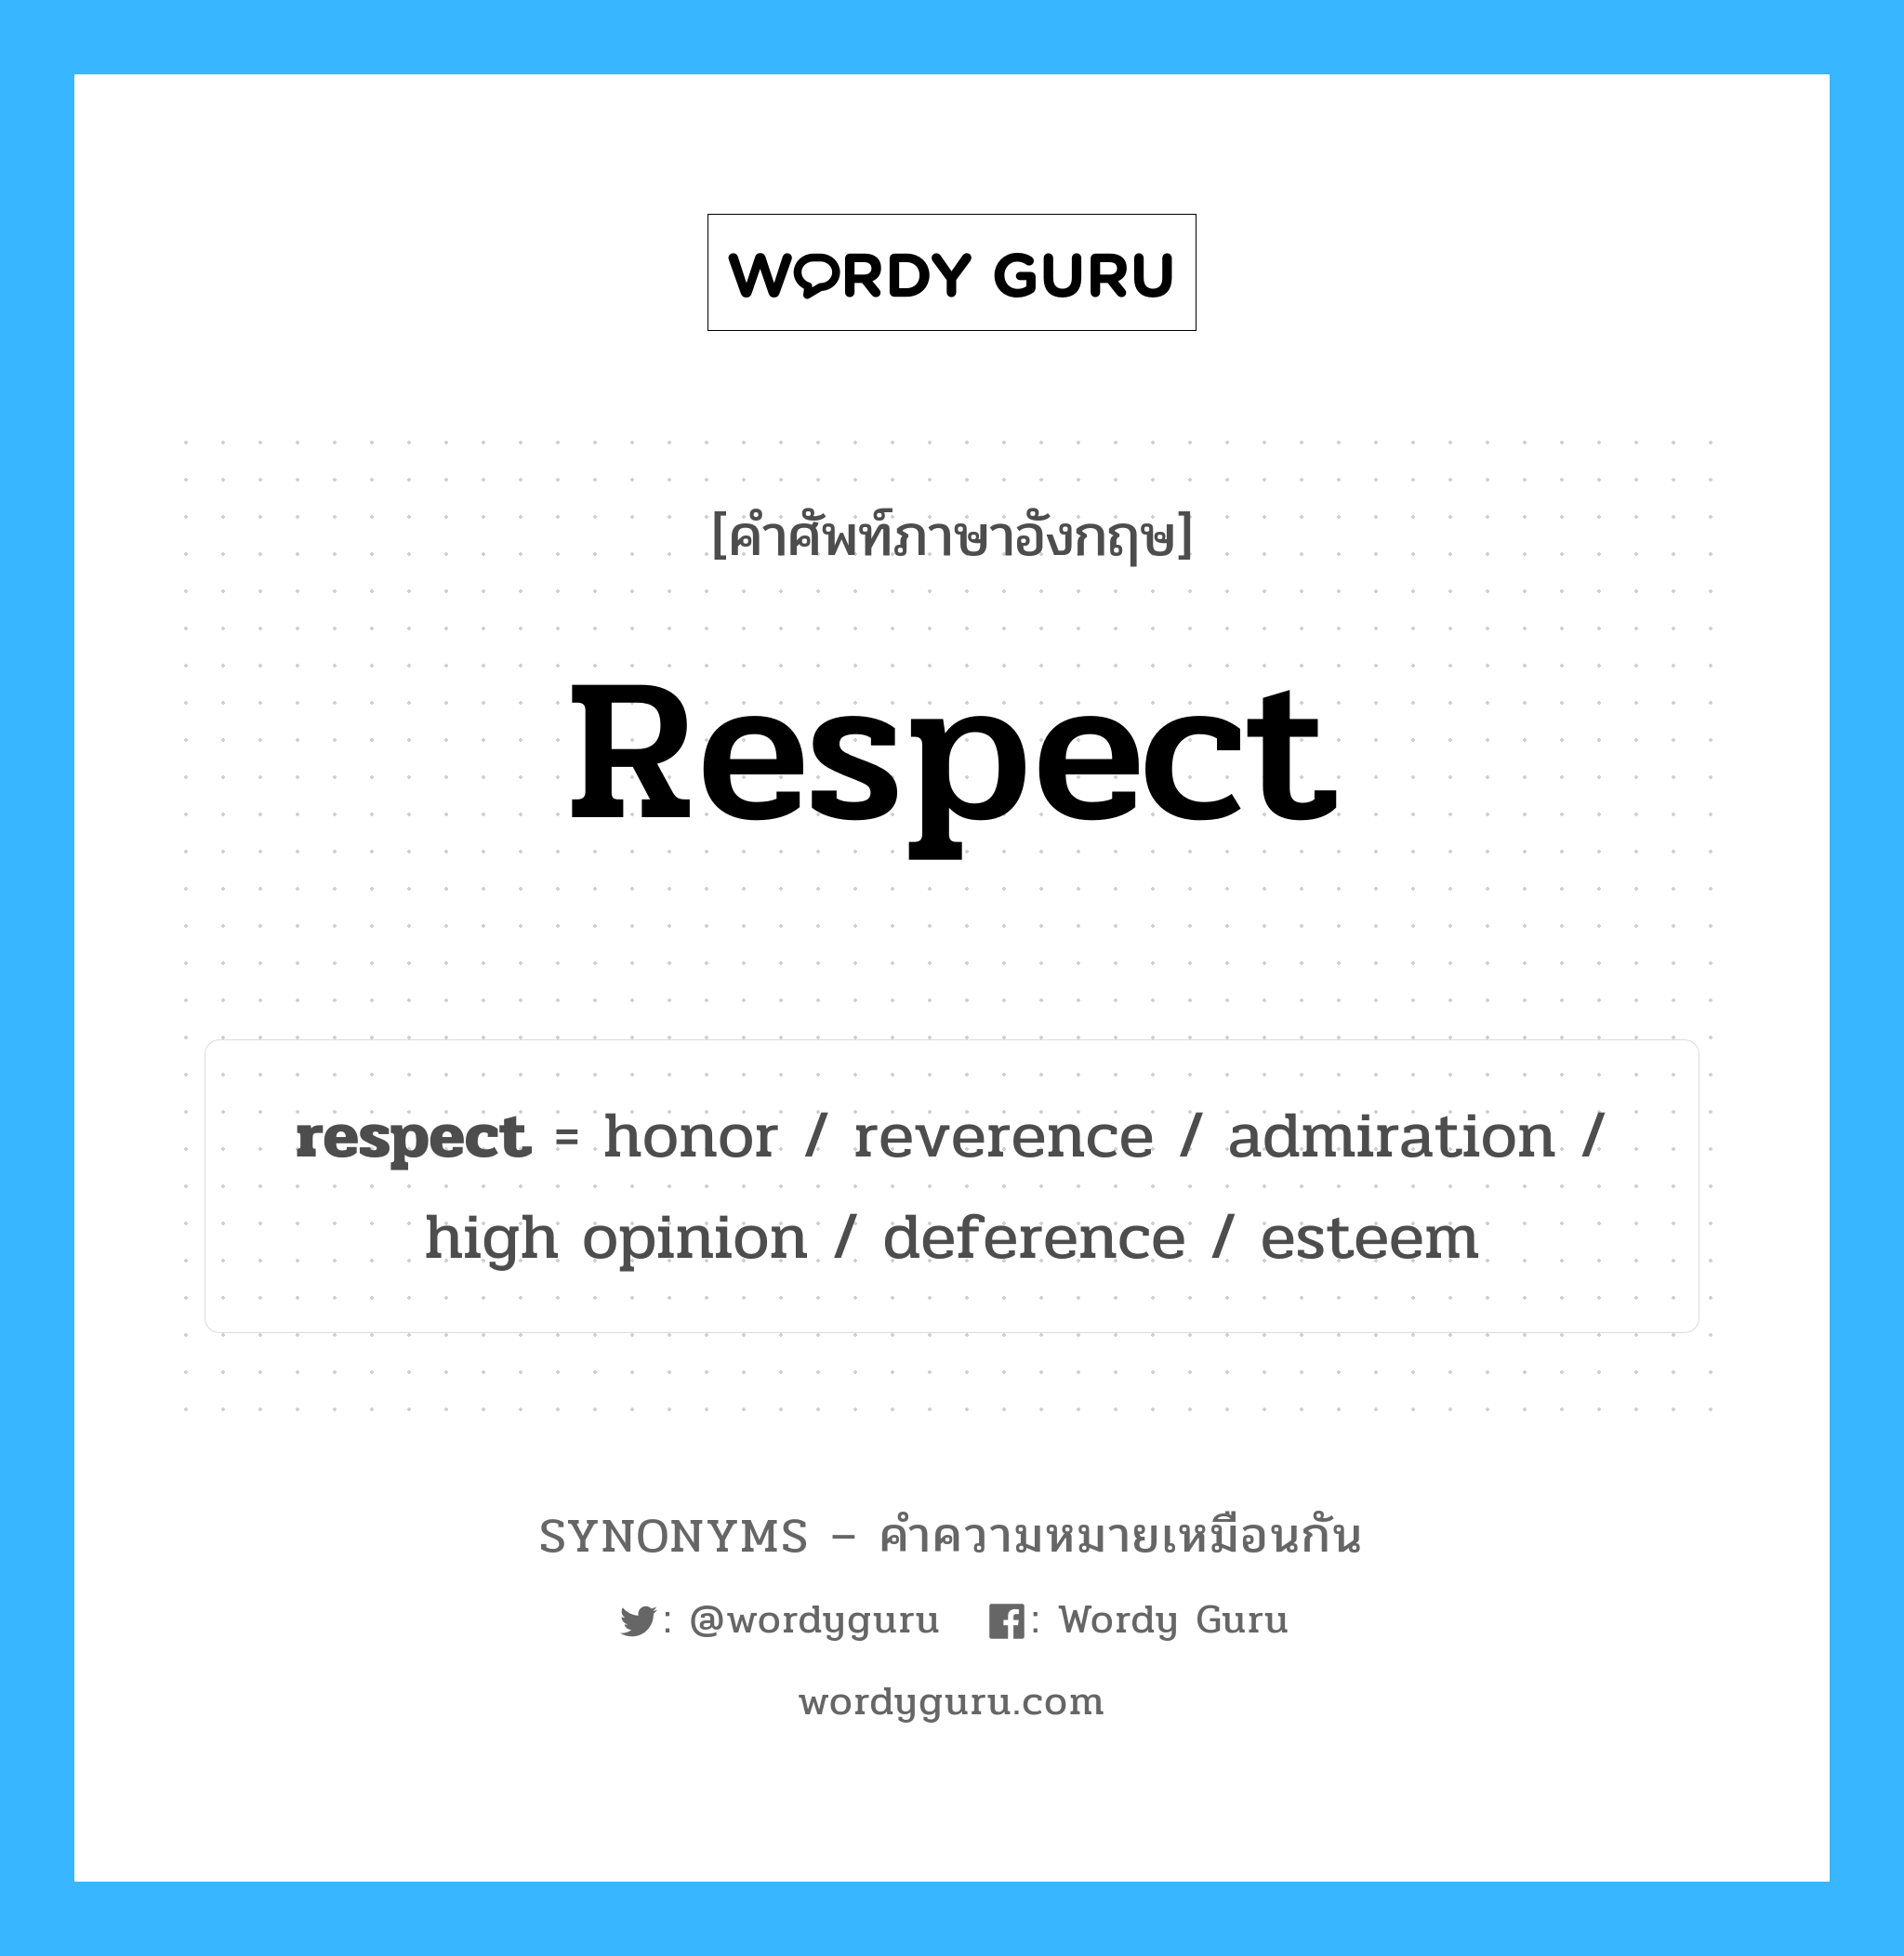 respect เป็นหนึ่งใน high opinion และมีคำอื่น ๆ อีกดังนี้, คำศัพท์ภาษาอังกฤษ respect ความหมายคล้ายกันกับ high opinion แปลว่า ความเห็นที่สูง หมวด high opinion